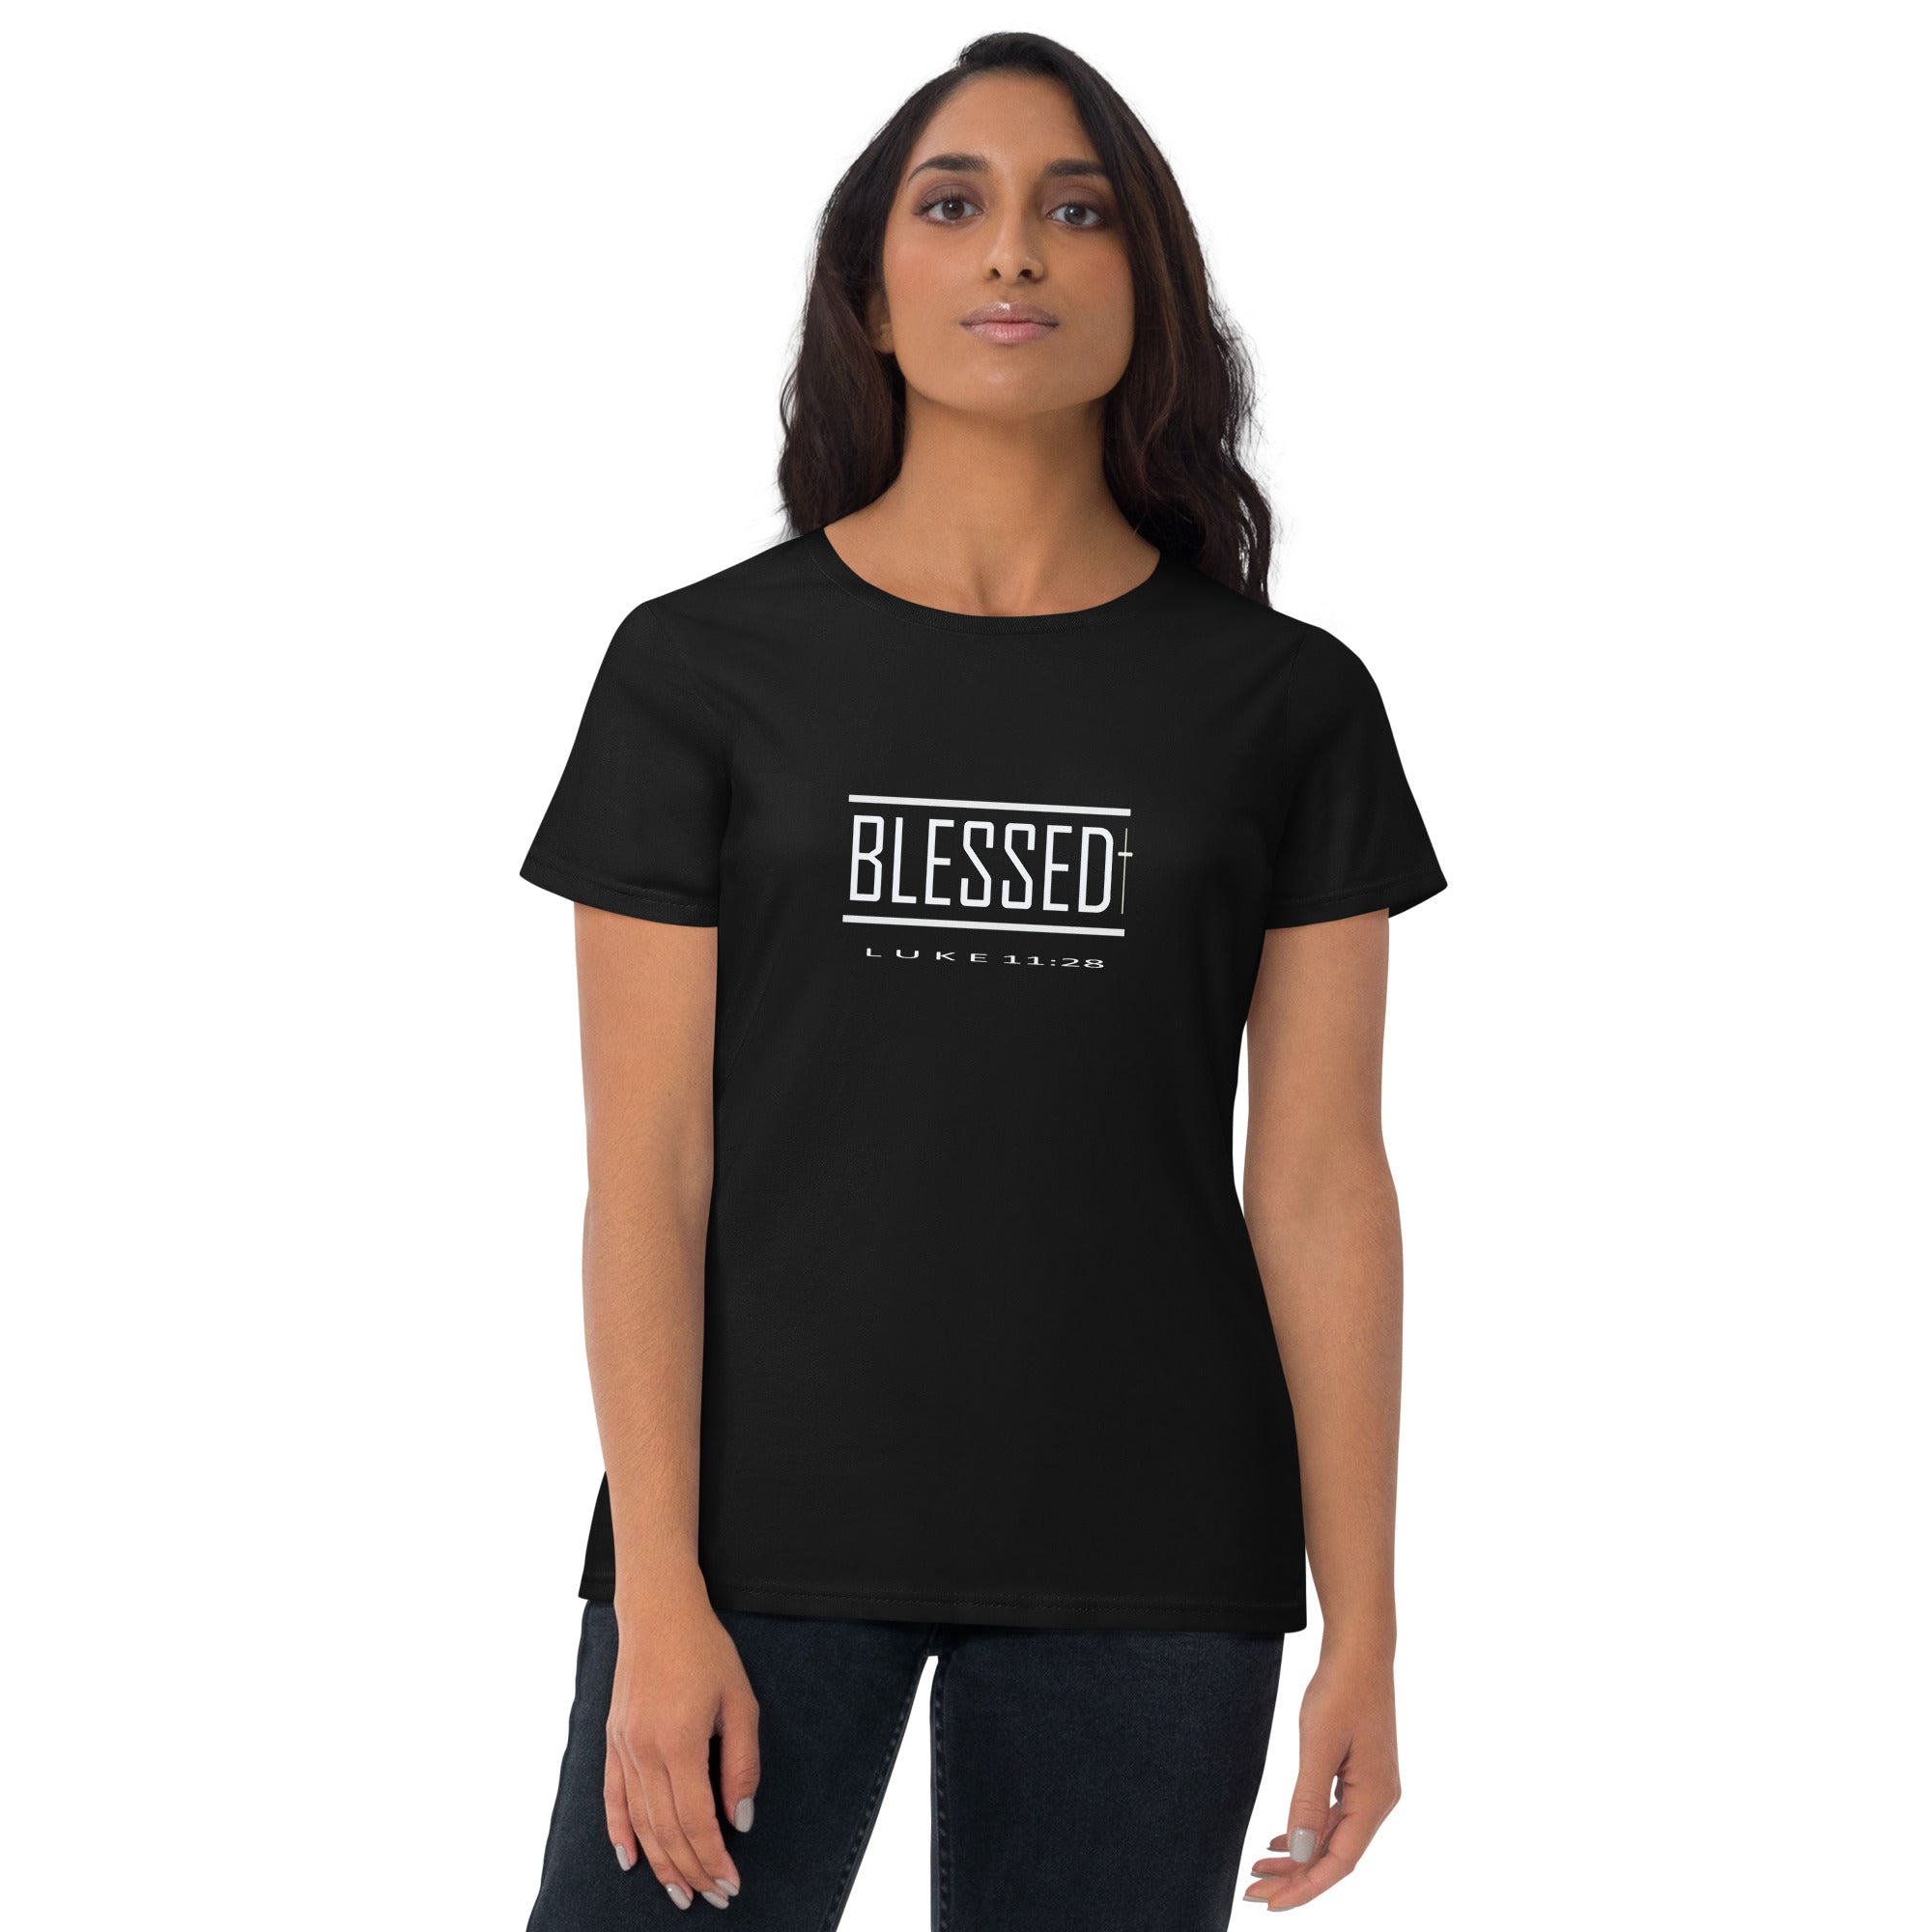 produktion Majroe Forkorte Blessed Women's short sleeve t-shirt – Ijustmightsellit